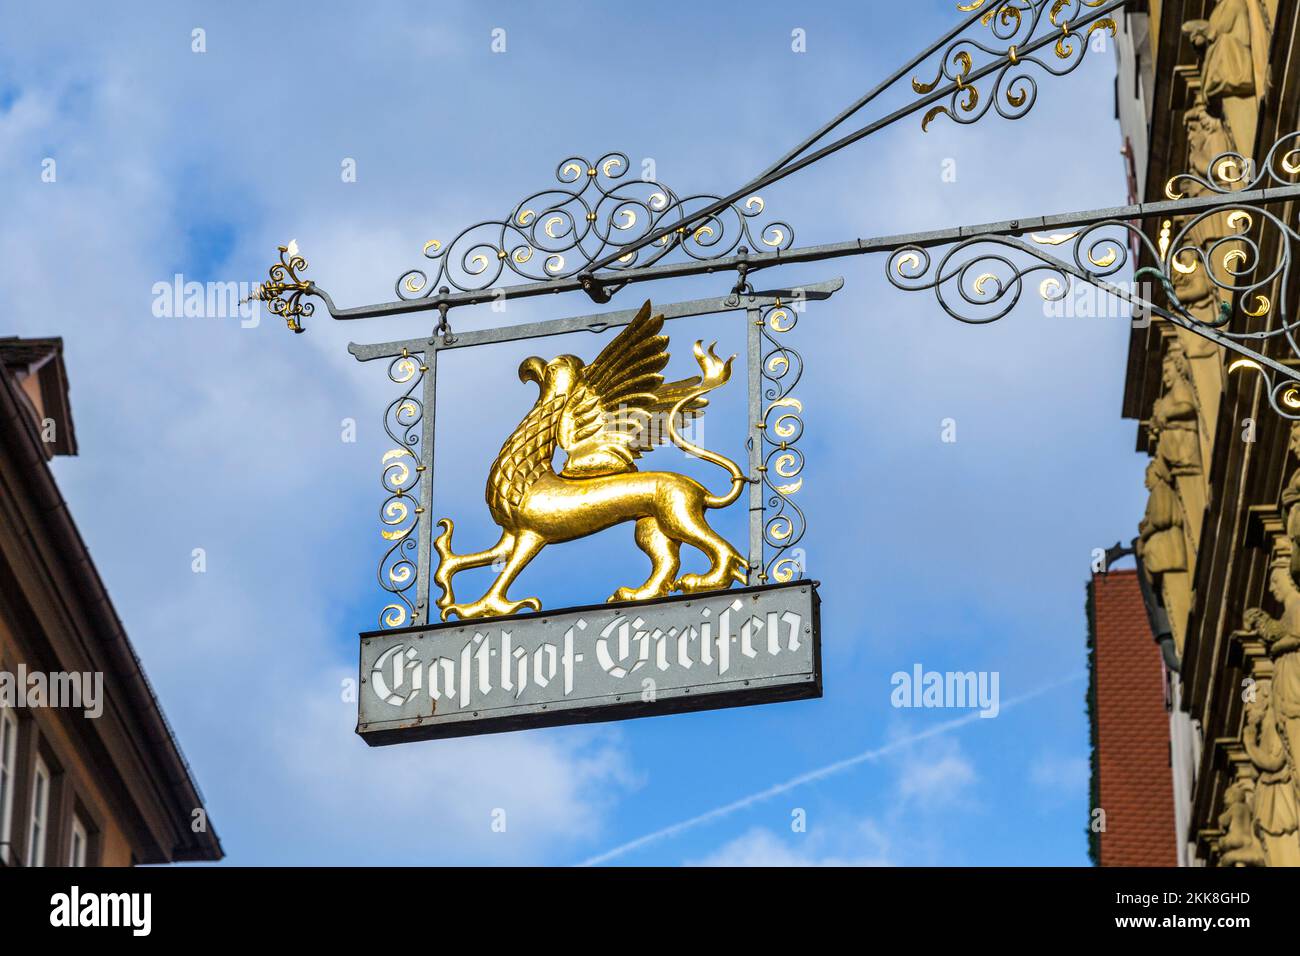 Rothenburg ob der Tauber, Germany - January 15, 2014: Medieval shop signage Gasthof Greifen engl: restaurant griffon , with griffon in gold symbolizin Stock Photo